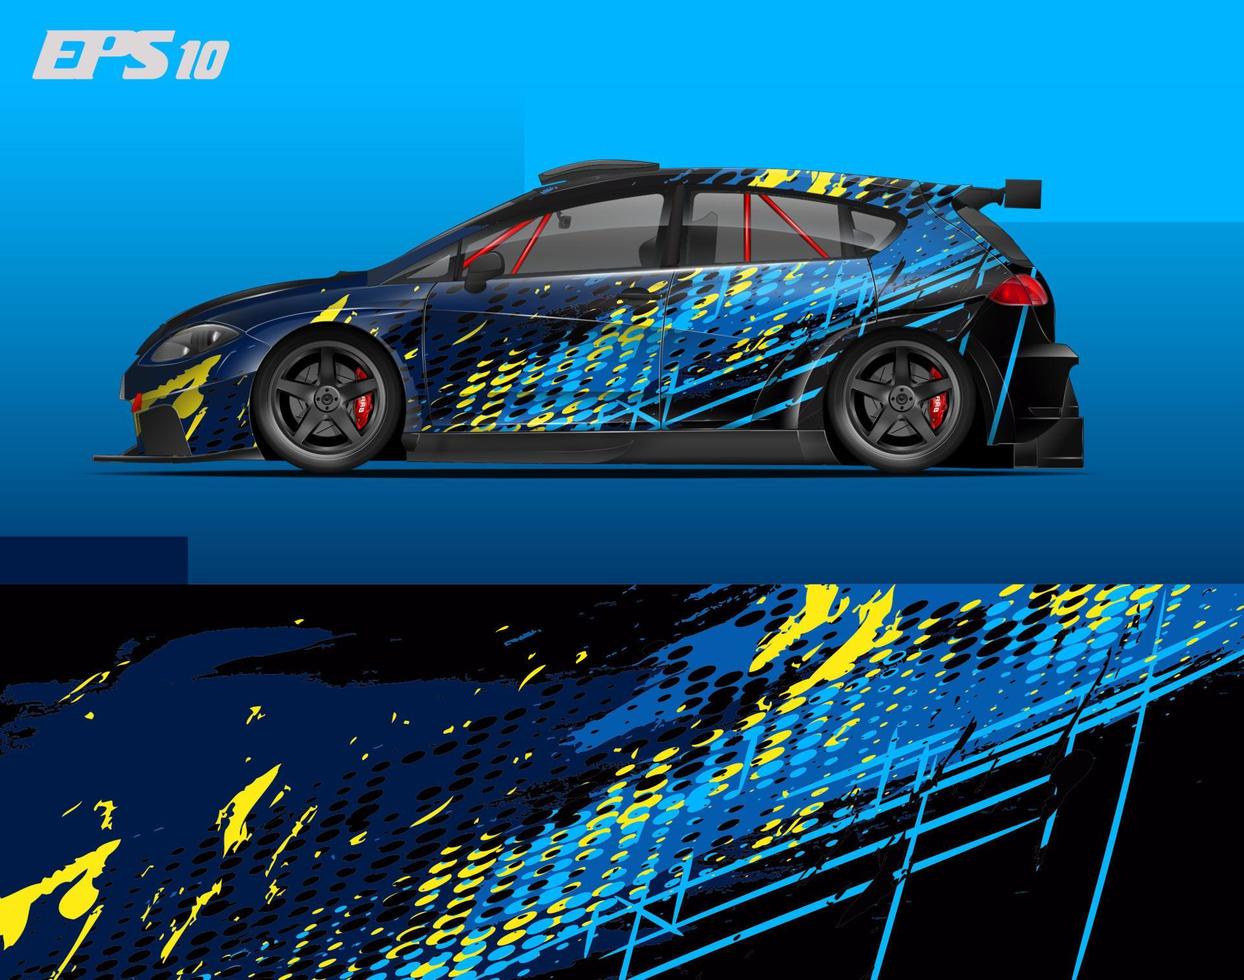 diseño de envoltura de coche abstracto diseño de fondo de carreras moderno para envoltura de vehículos, coche de carreras, rally, etc. vector